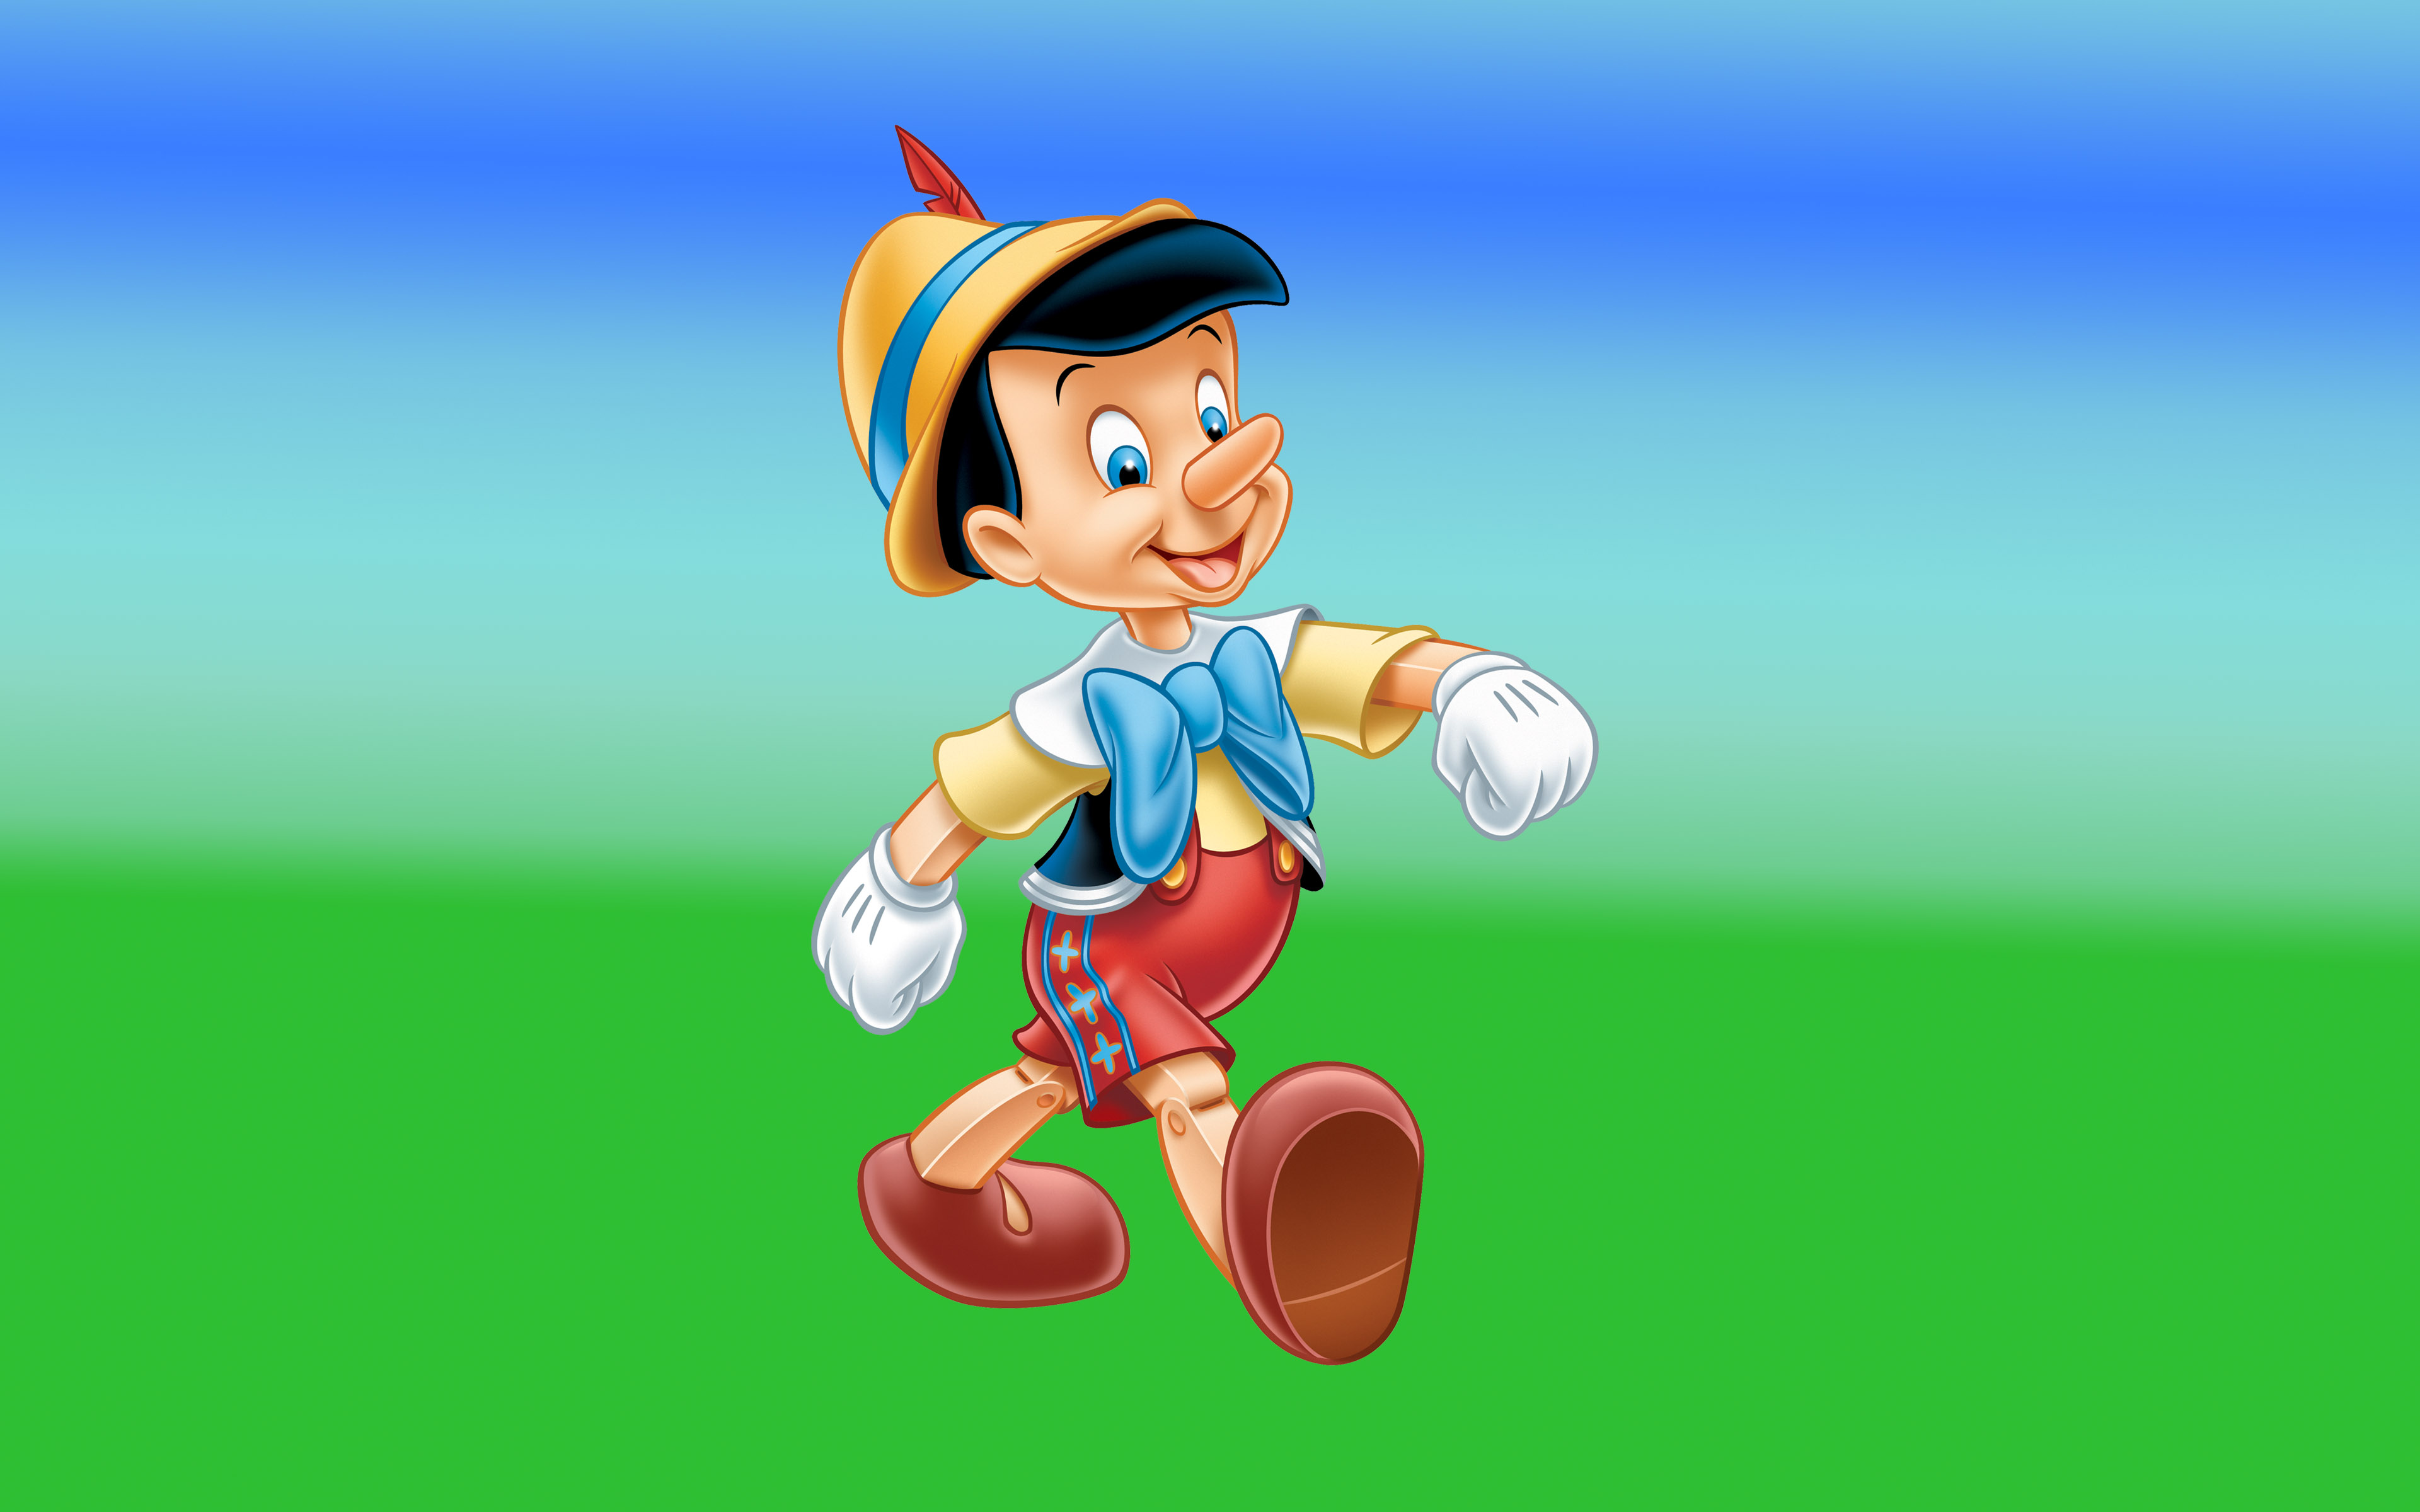 Pinocchio Disney Images Desktop Hd Wallpaper For Mobile Phones Tablet